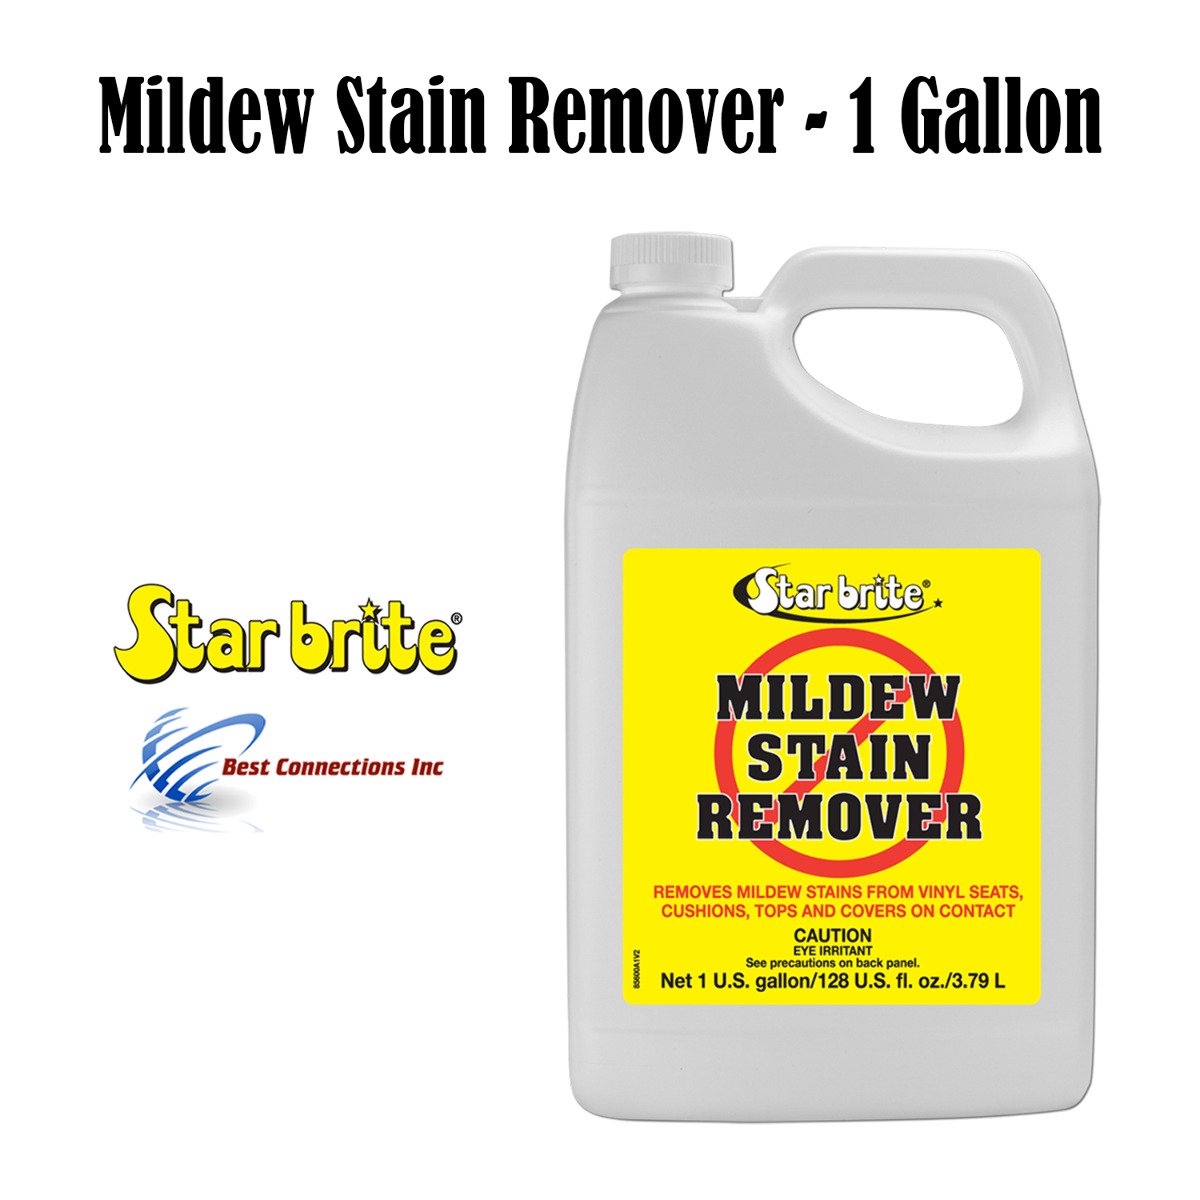 Starbrite 1 Gallon Mildew Stain Remover Fiberglass, Vinyl, Plastic Surface 85600